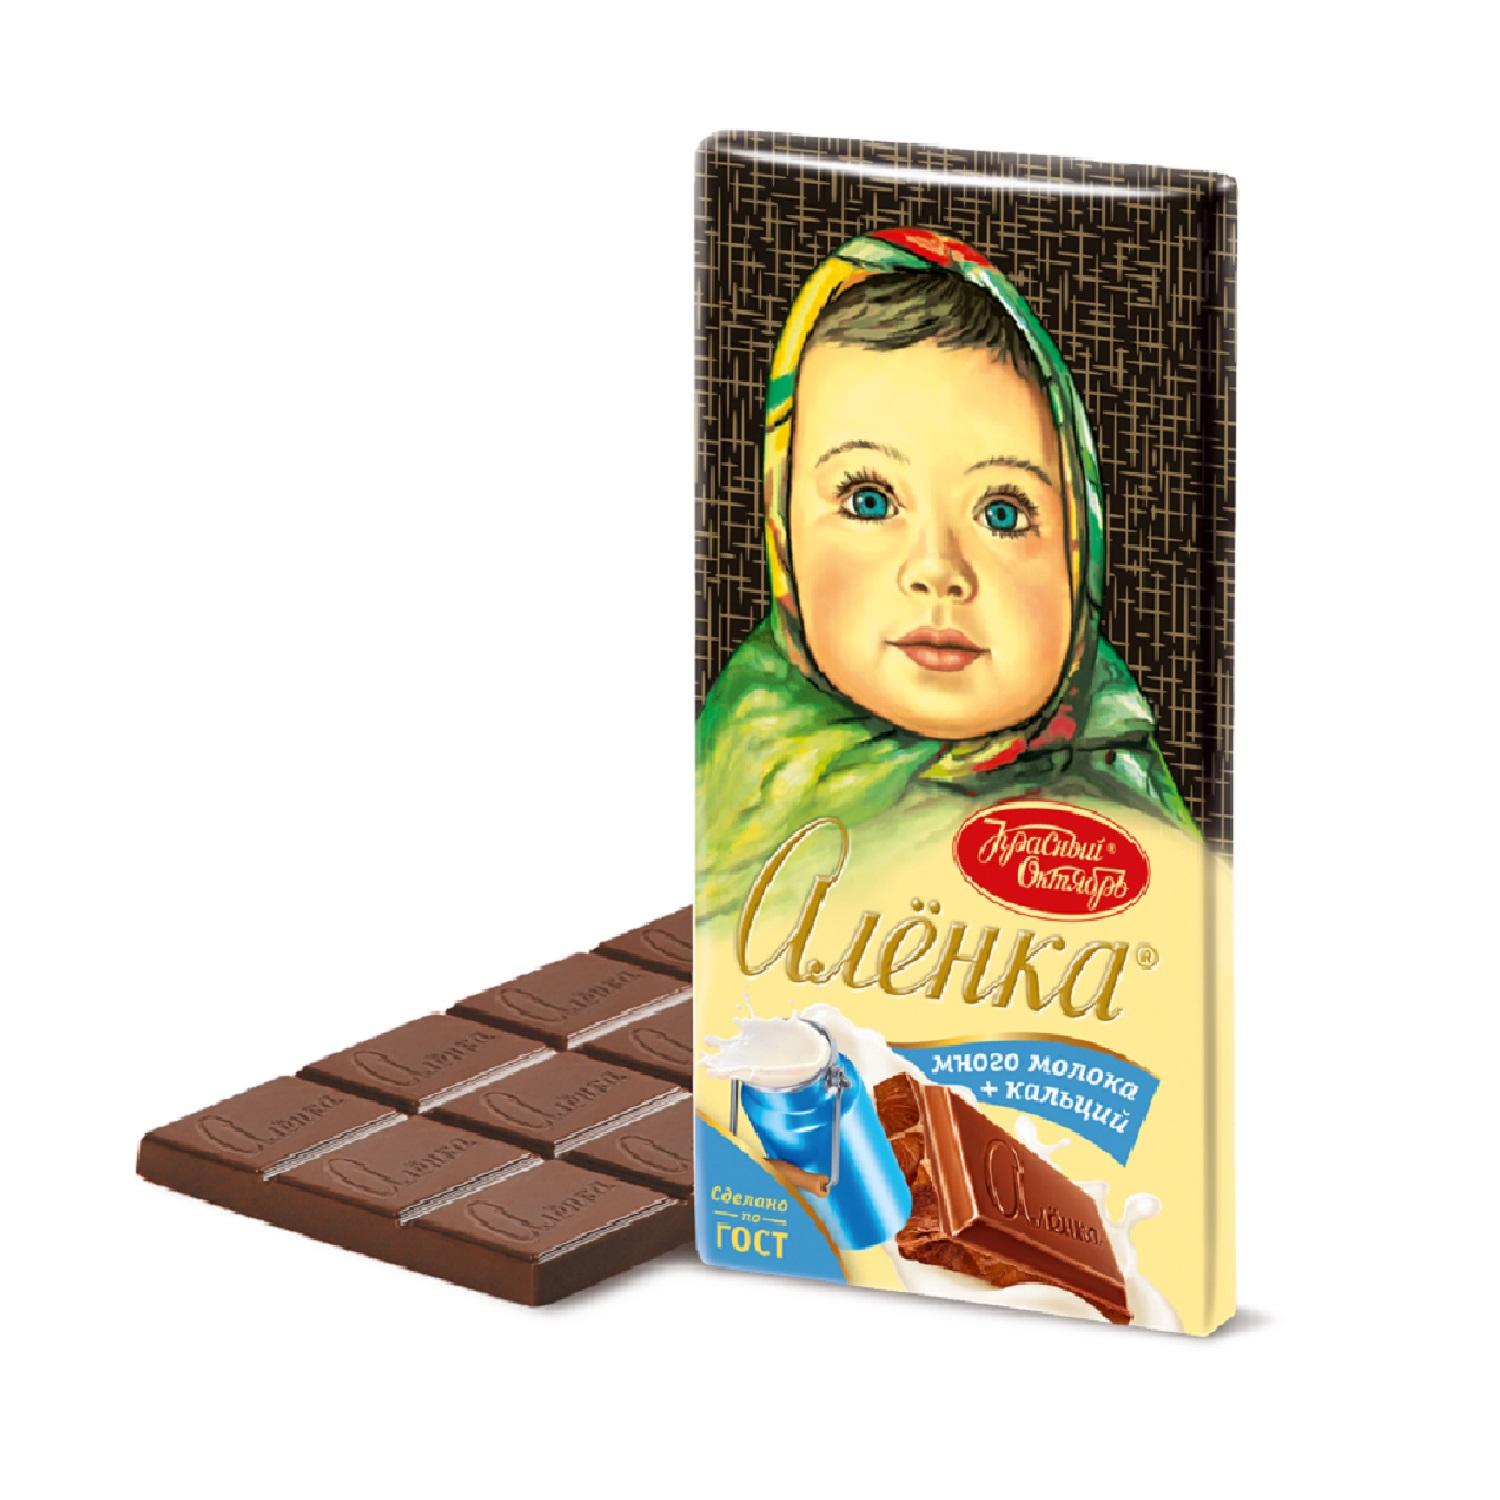 Шоколад Аленка много молока  Кр Окт  100г - интернет-магазин Близнецы